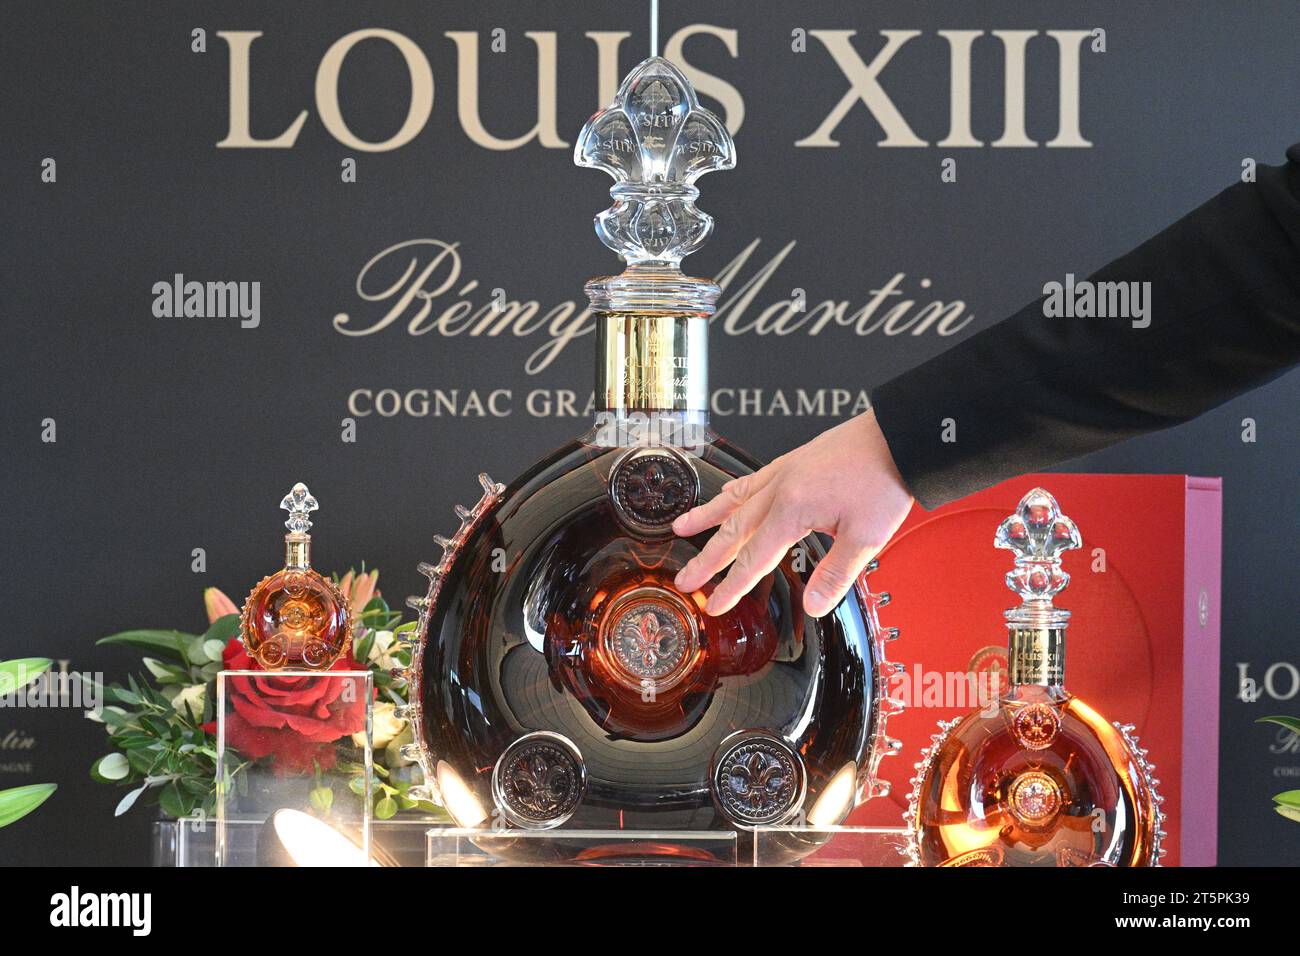 Remy Martin Cognac Louis XIII 1980 - Iconic Cognac